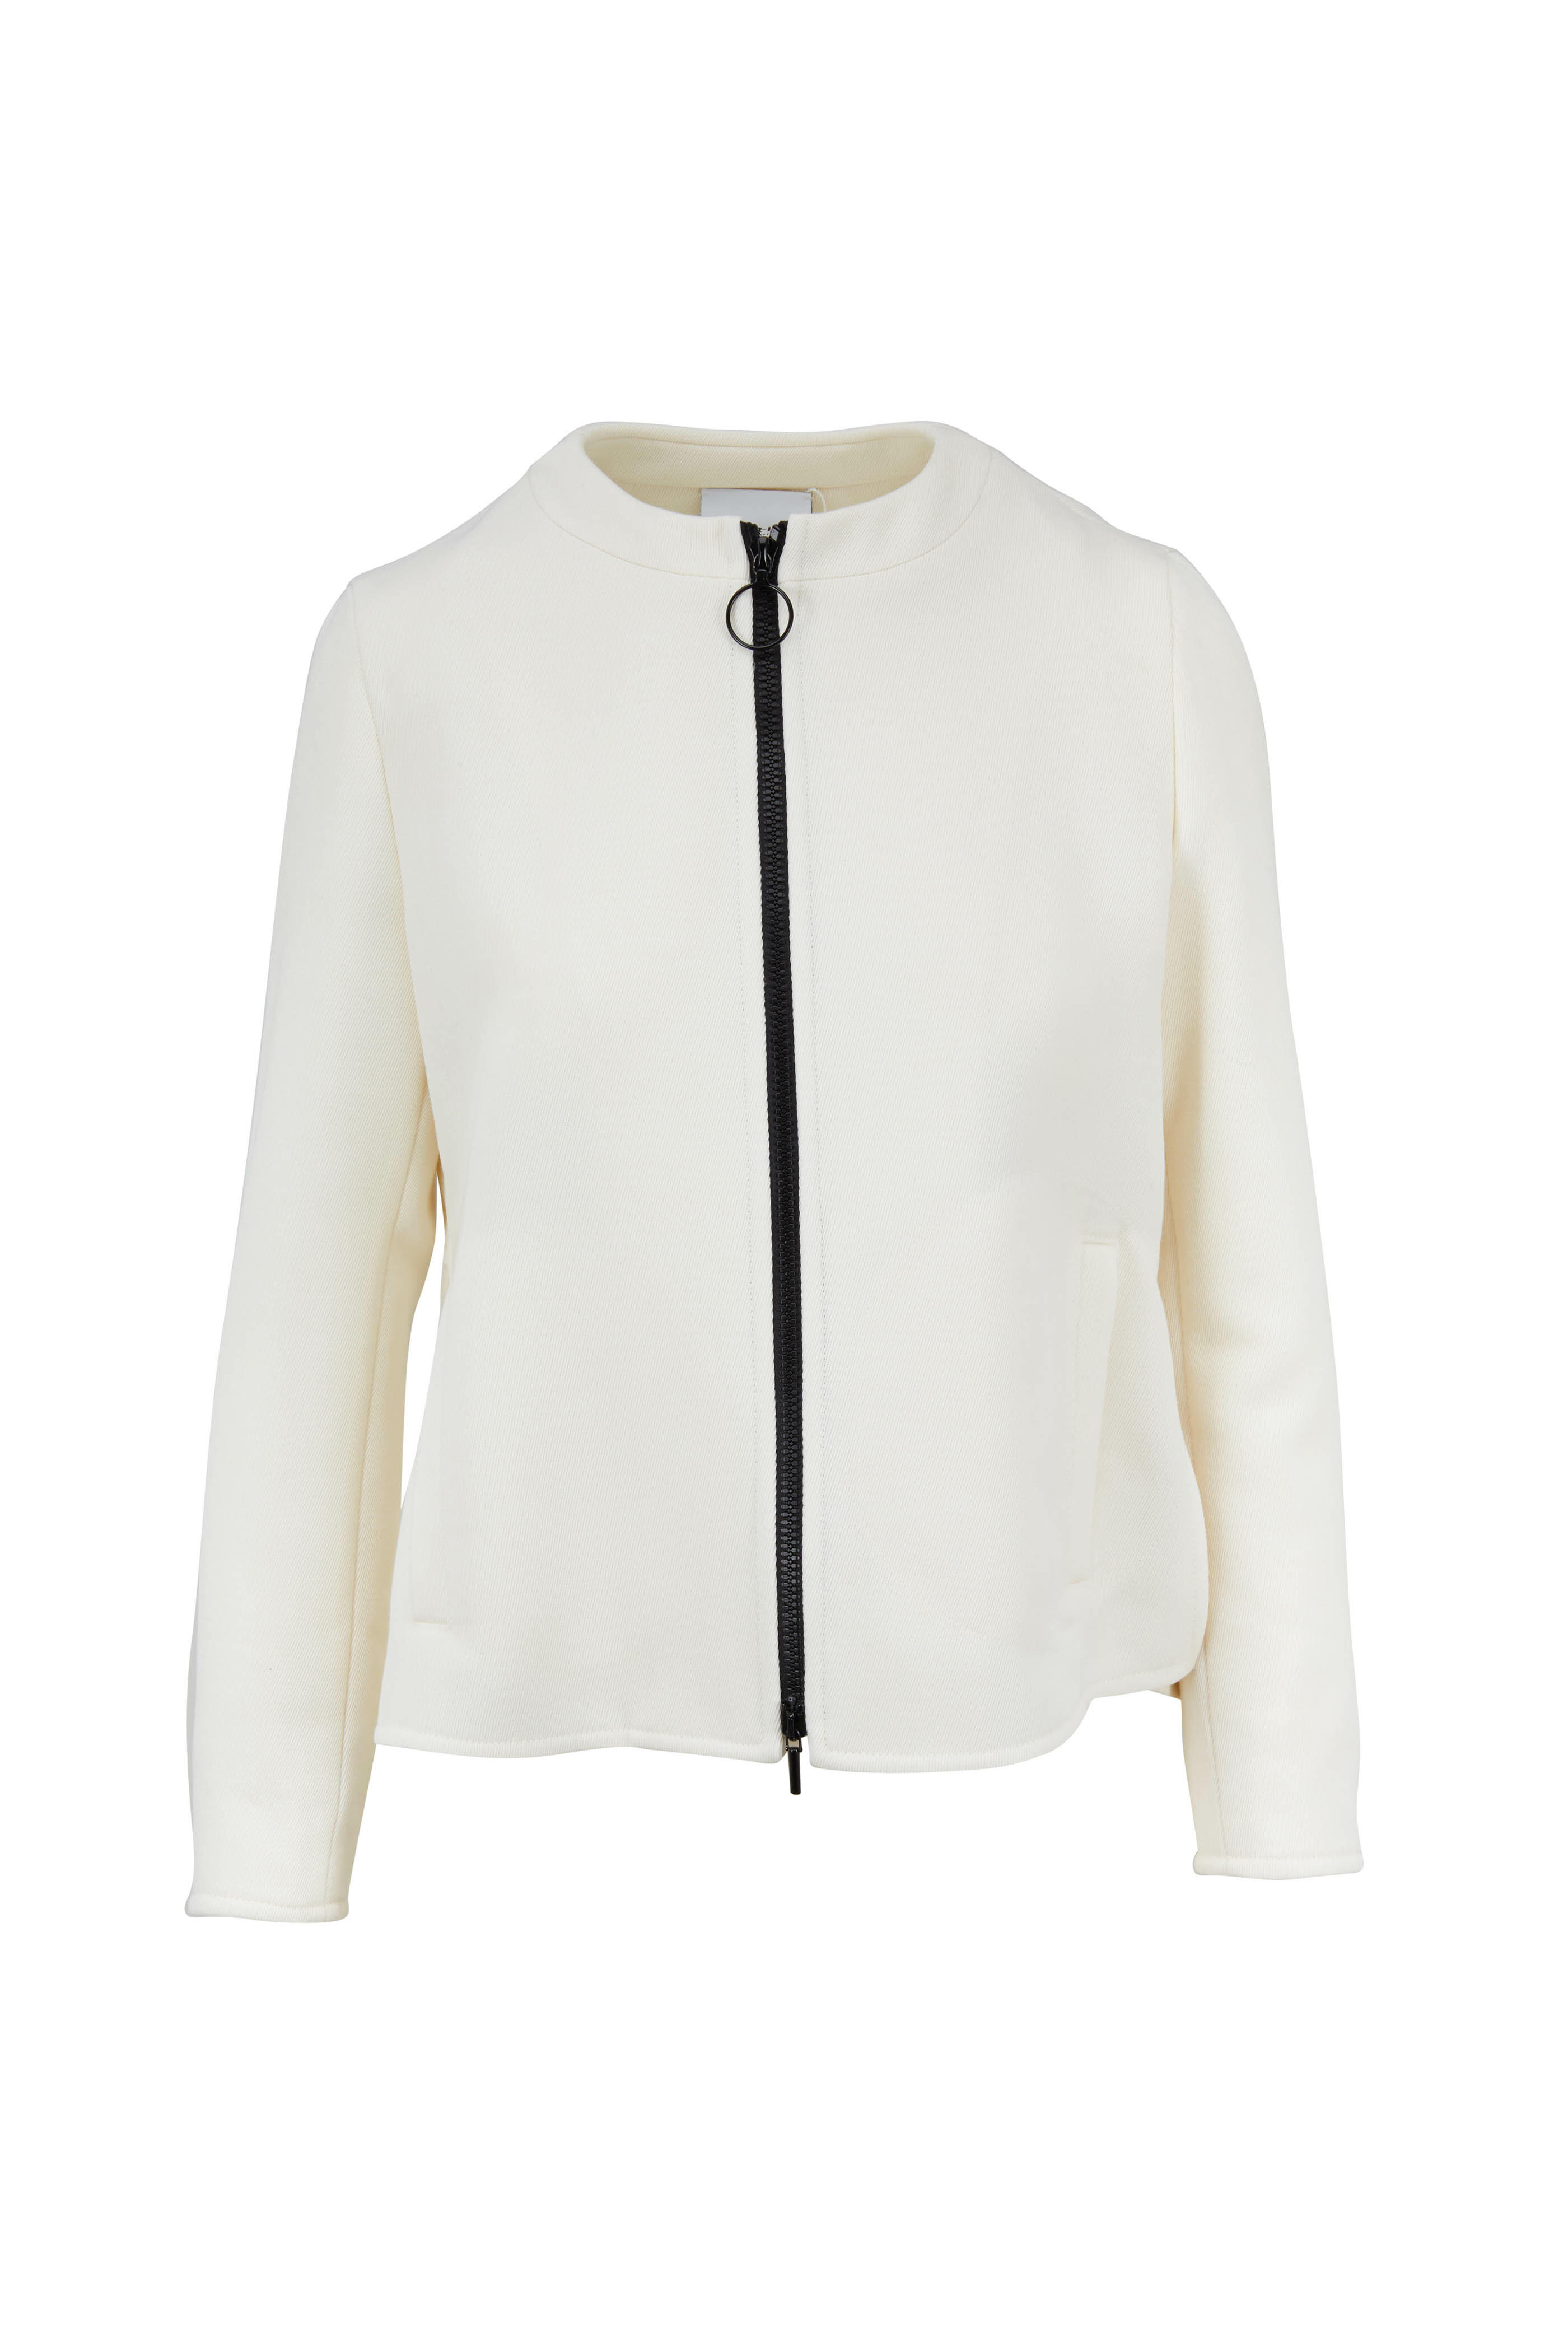 Akris Punto - Cream Wool Contrast Zip Jacket | Mitchell Stores